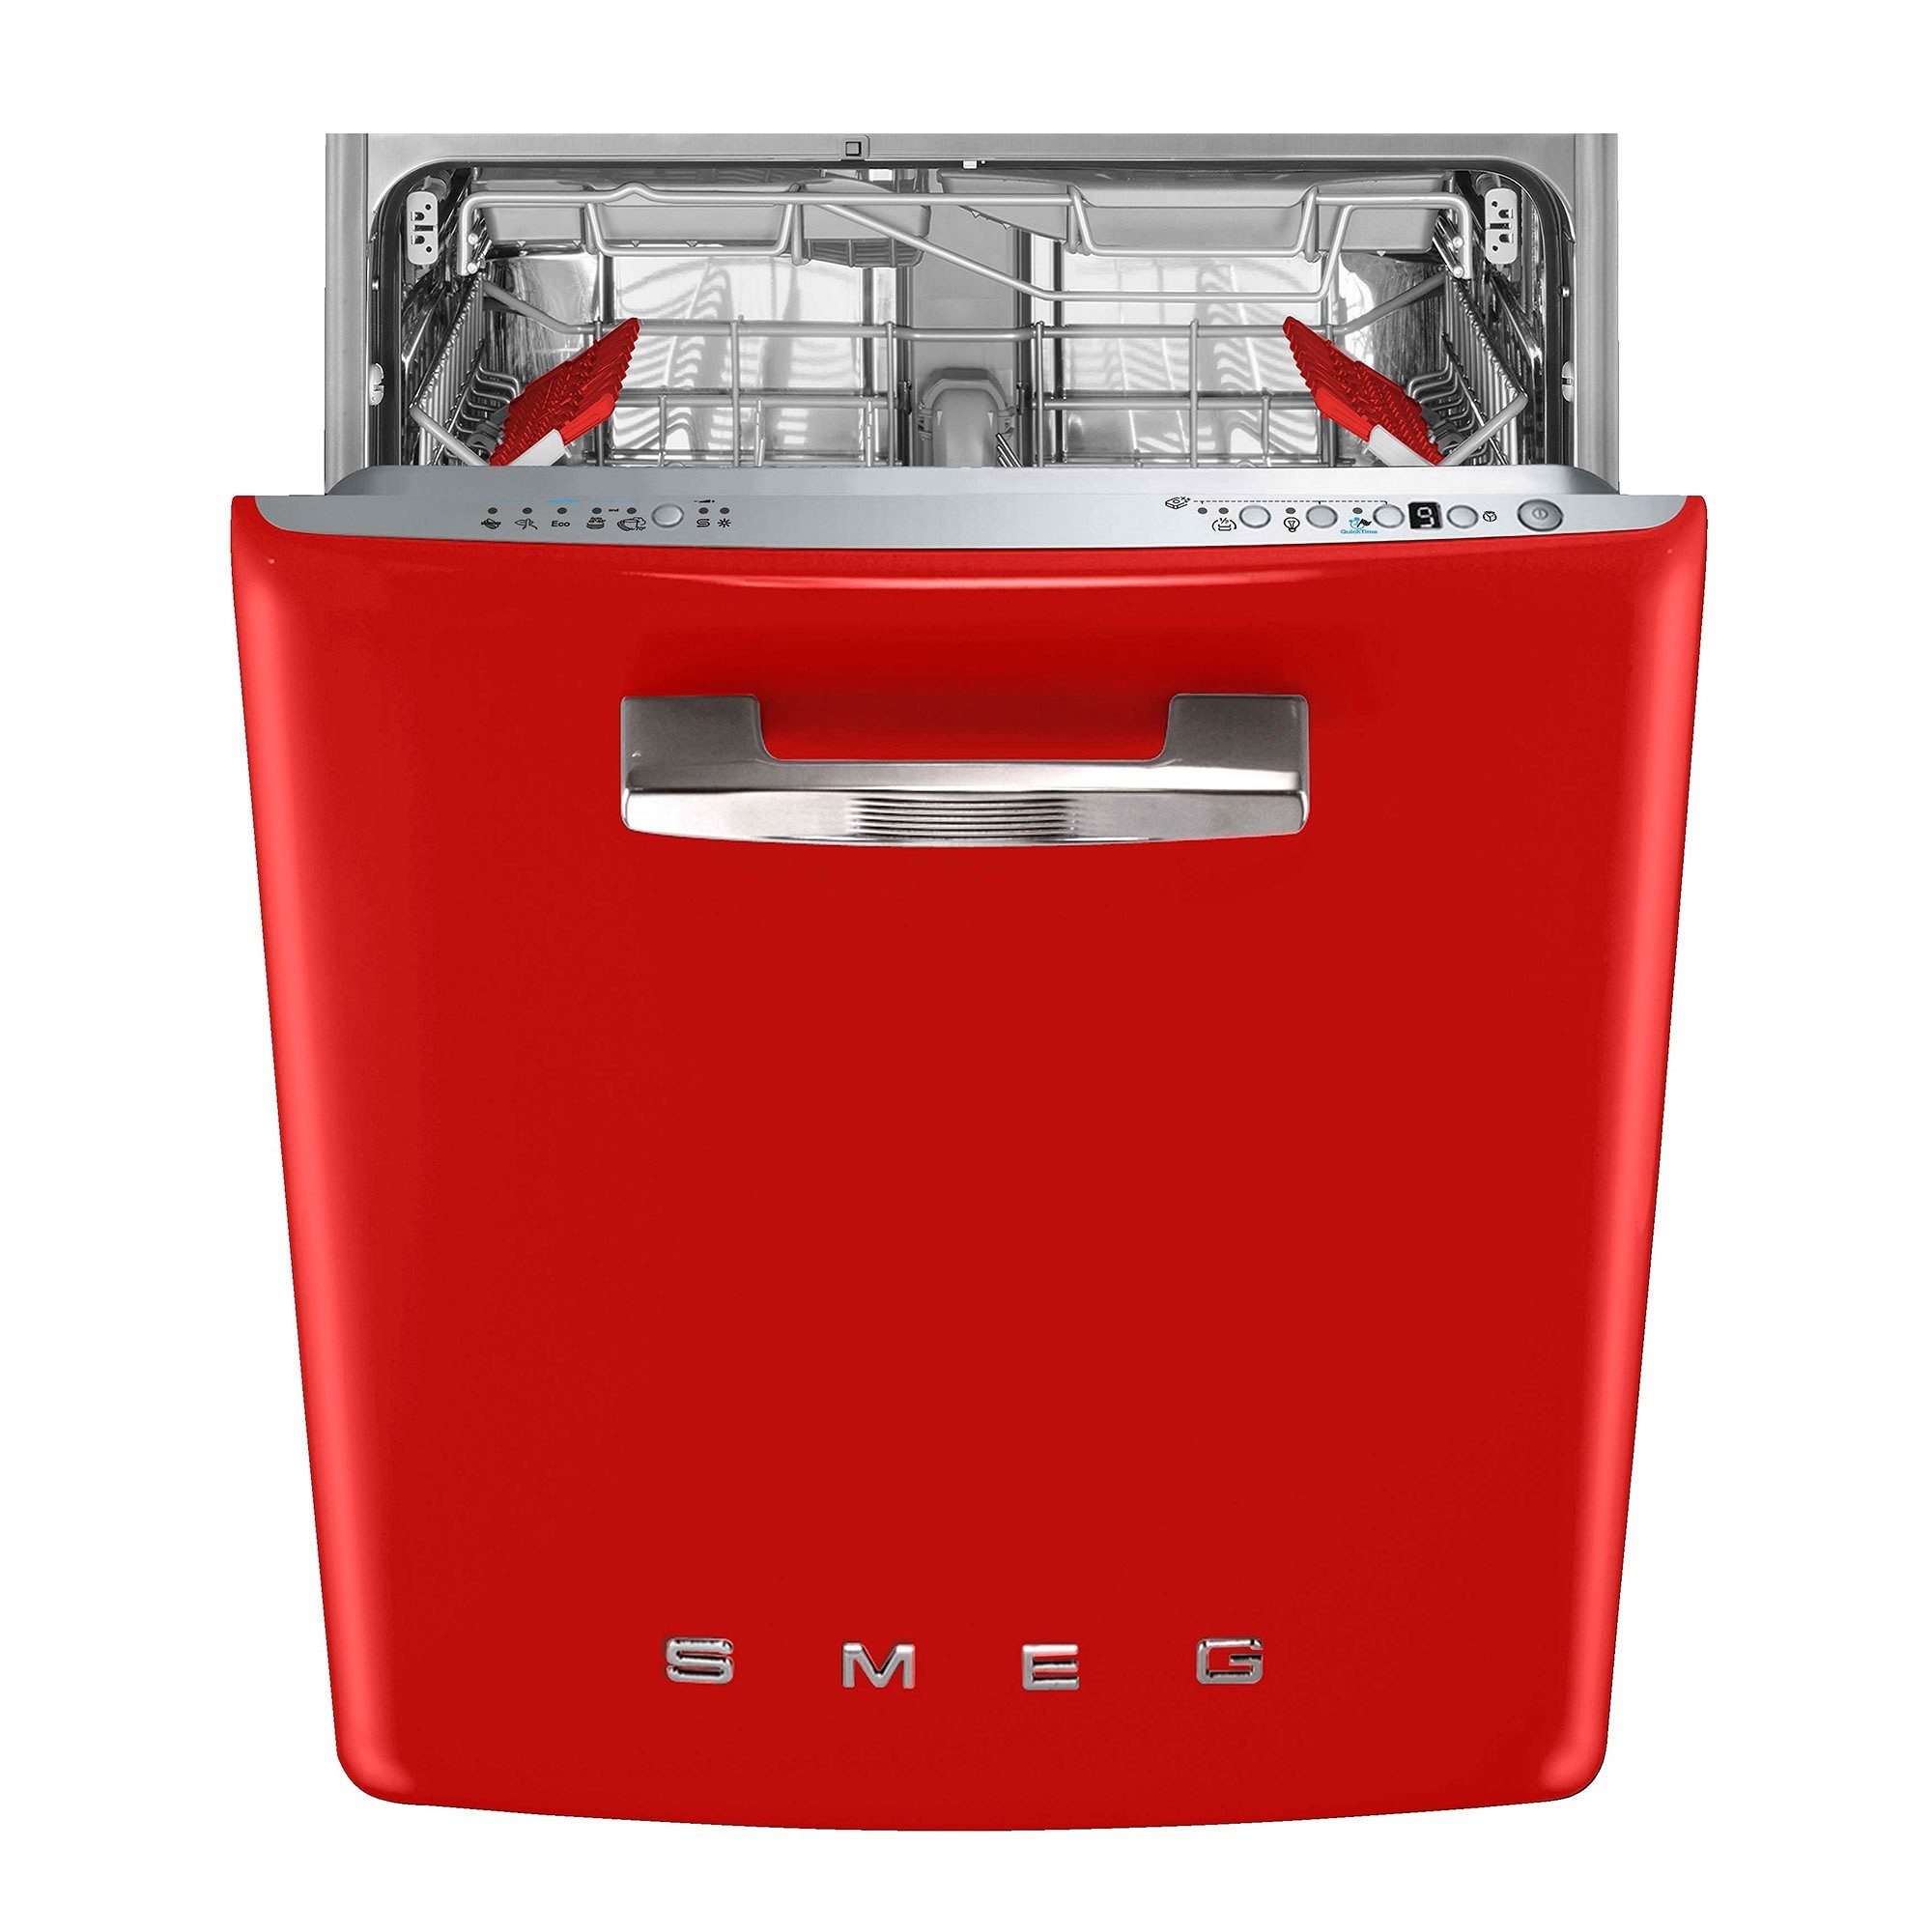 SMEG 24" Retro Dishwasher in Red